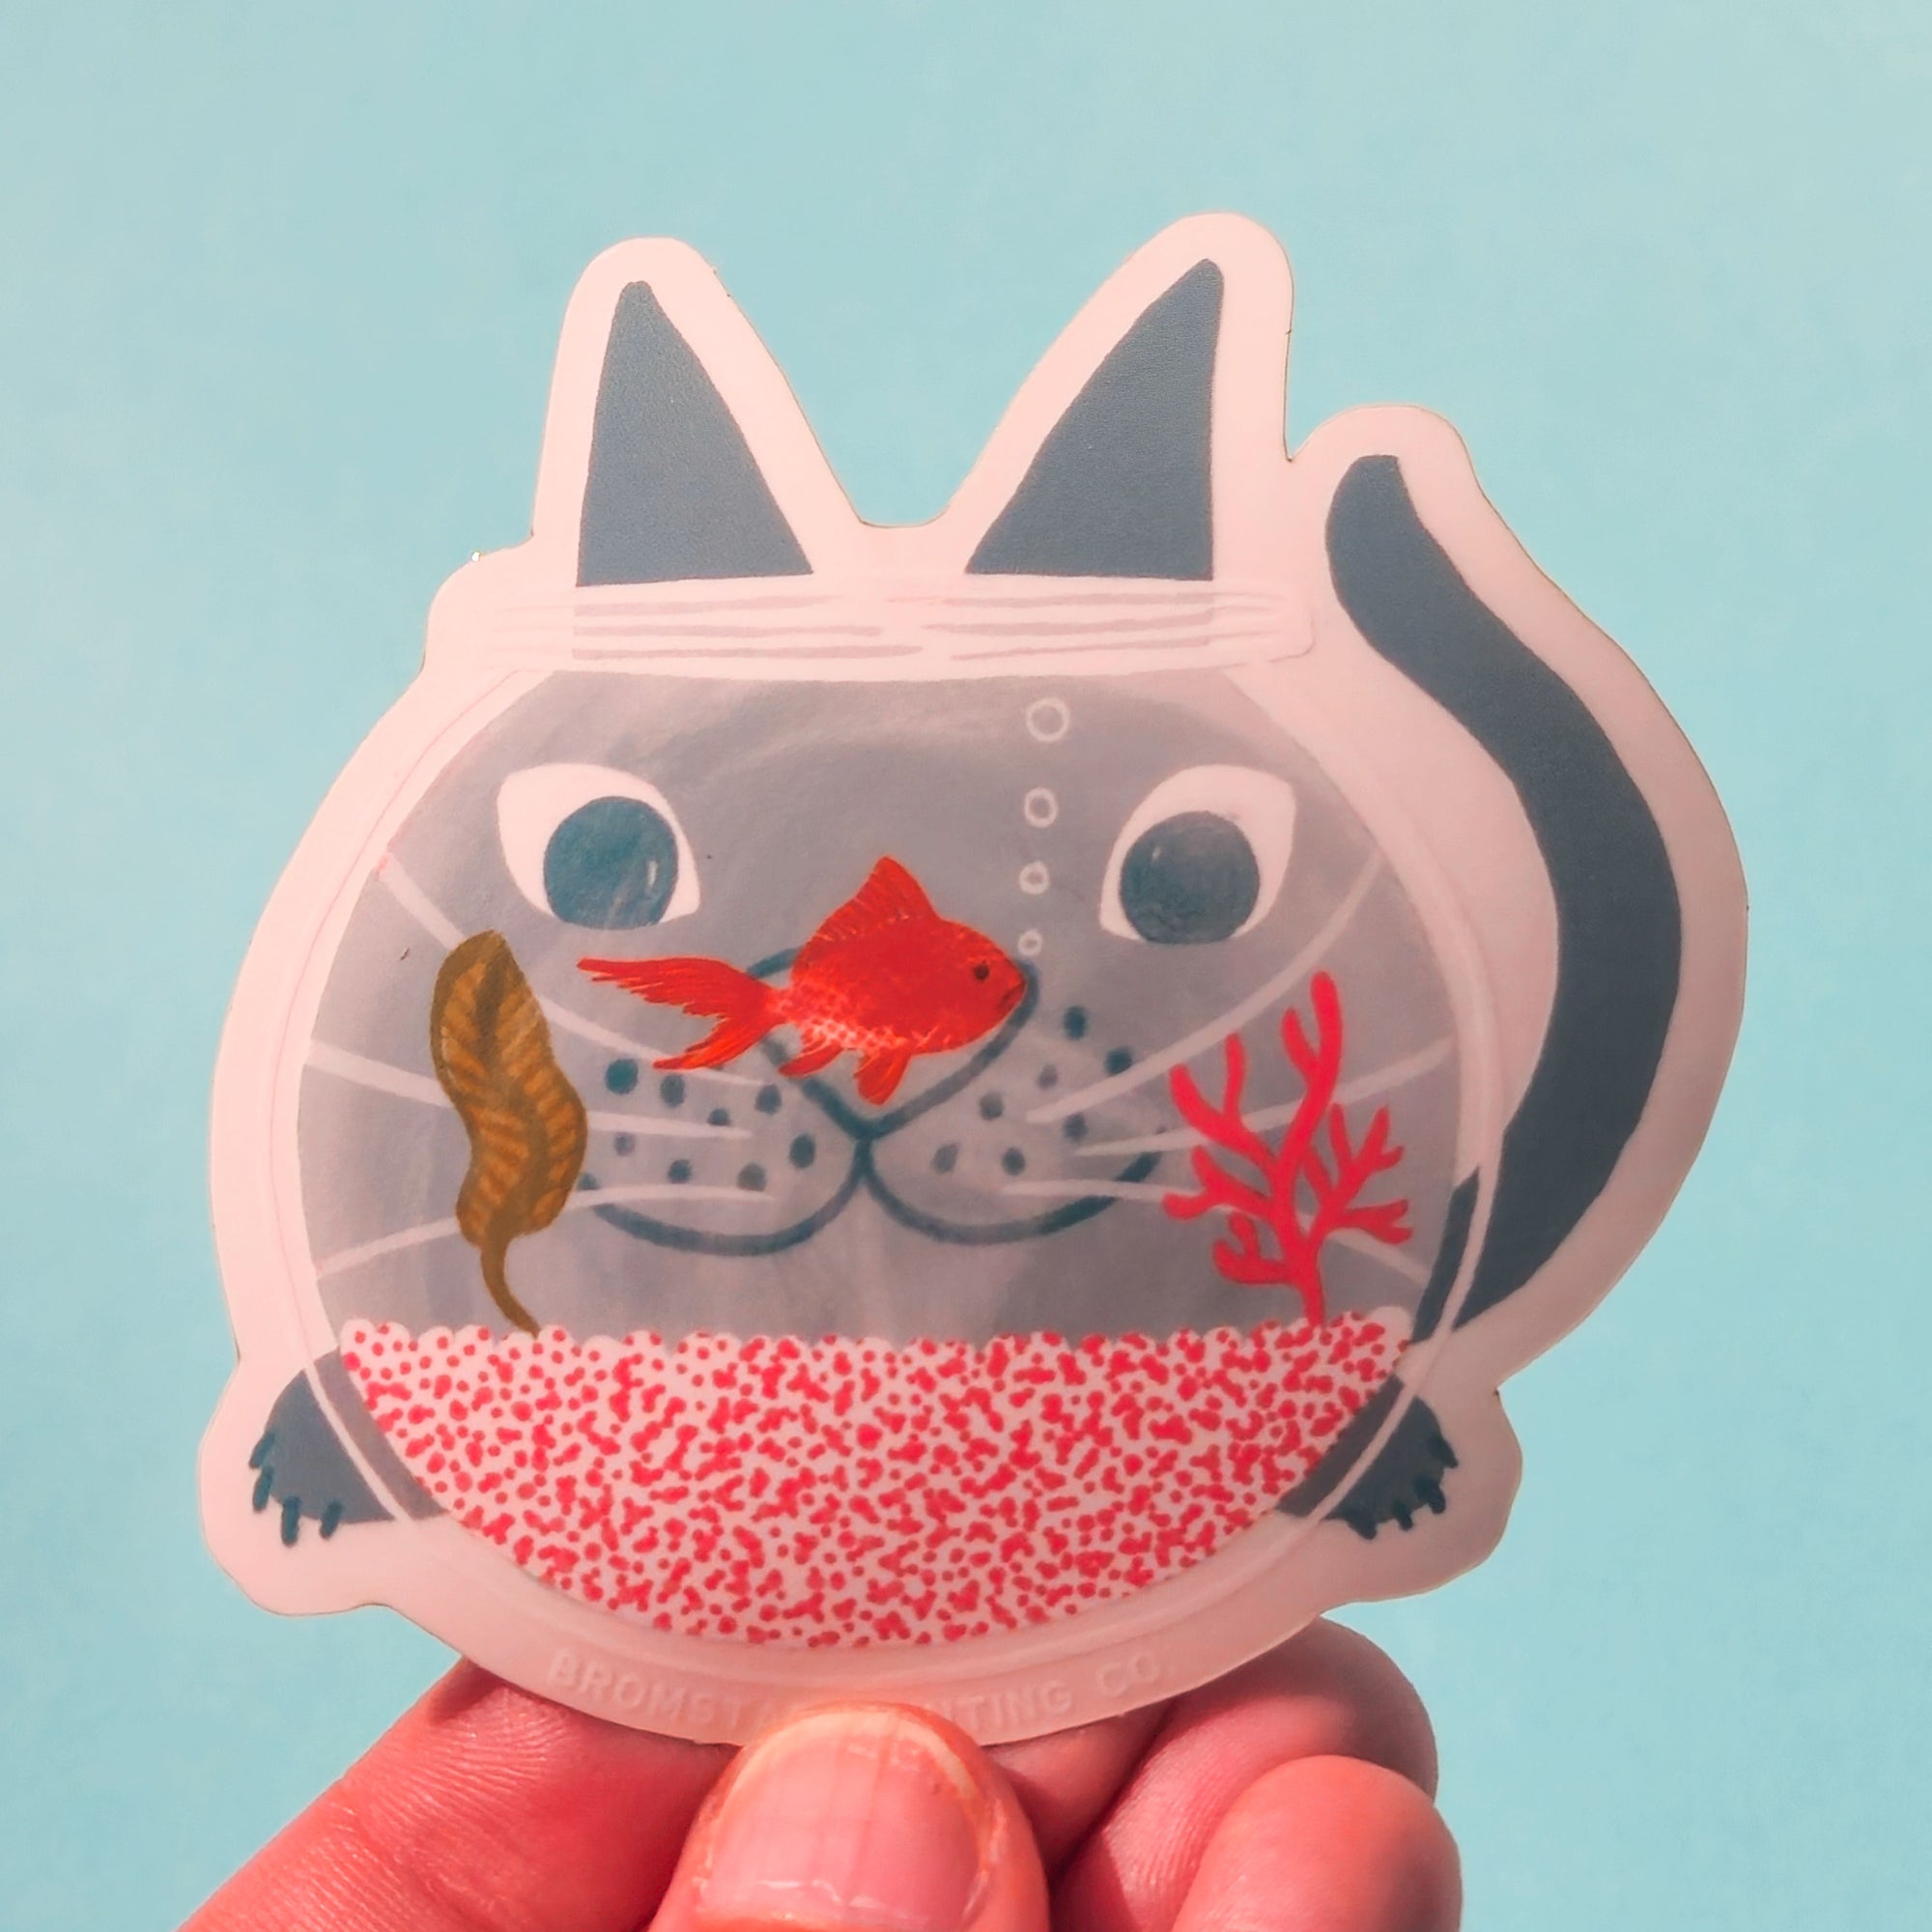 Fishbowl Cat Clear Sticker